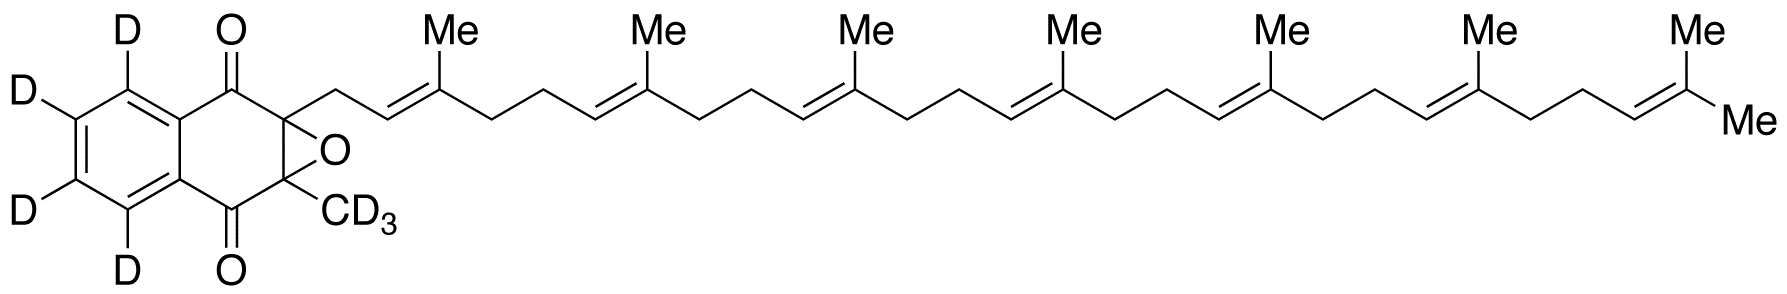 Menaquinone 7-d7 2,3-Epoxide